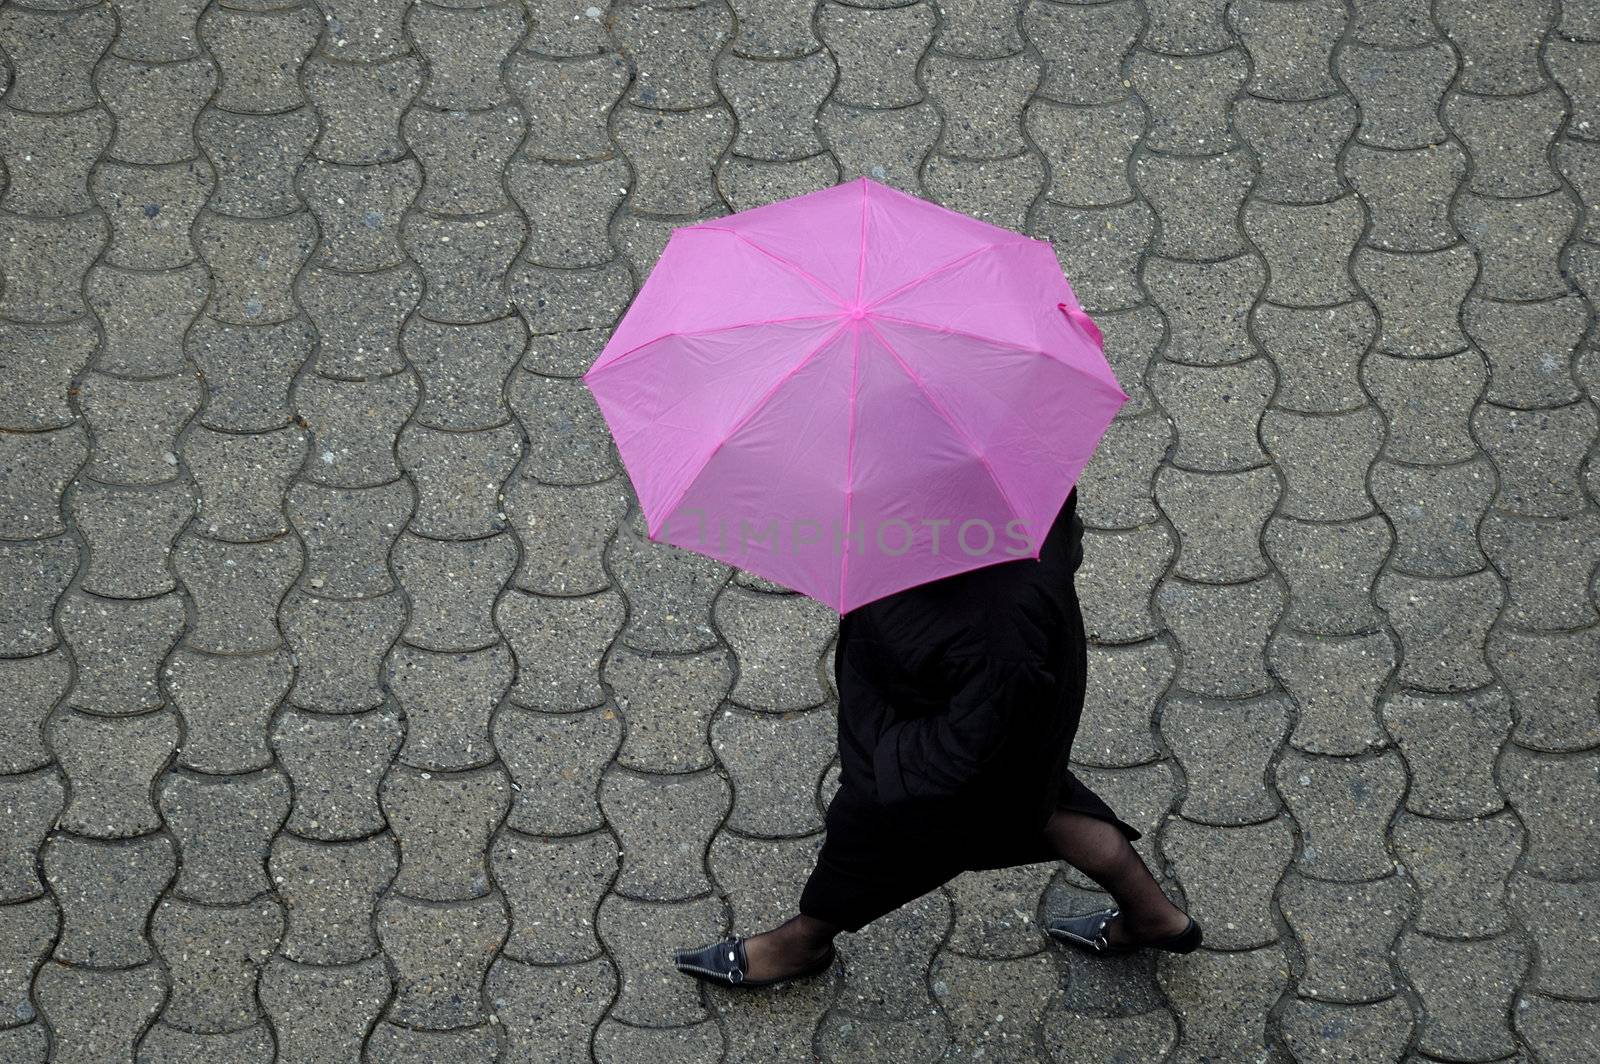 A woman, undera pink umbrella, walks across a paved square.